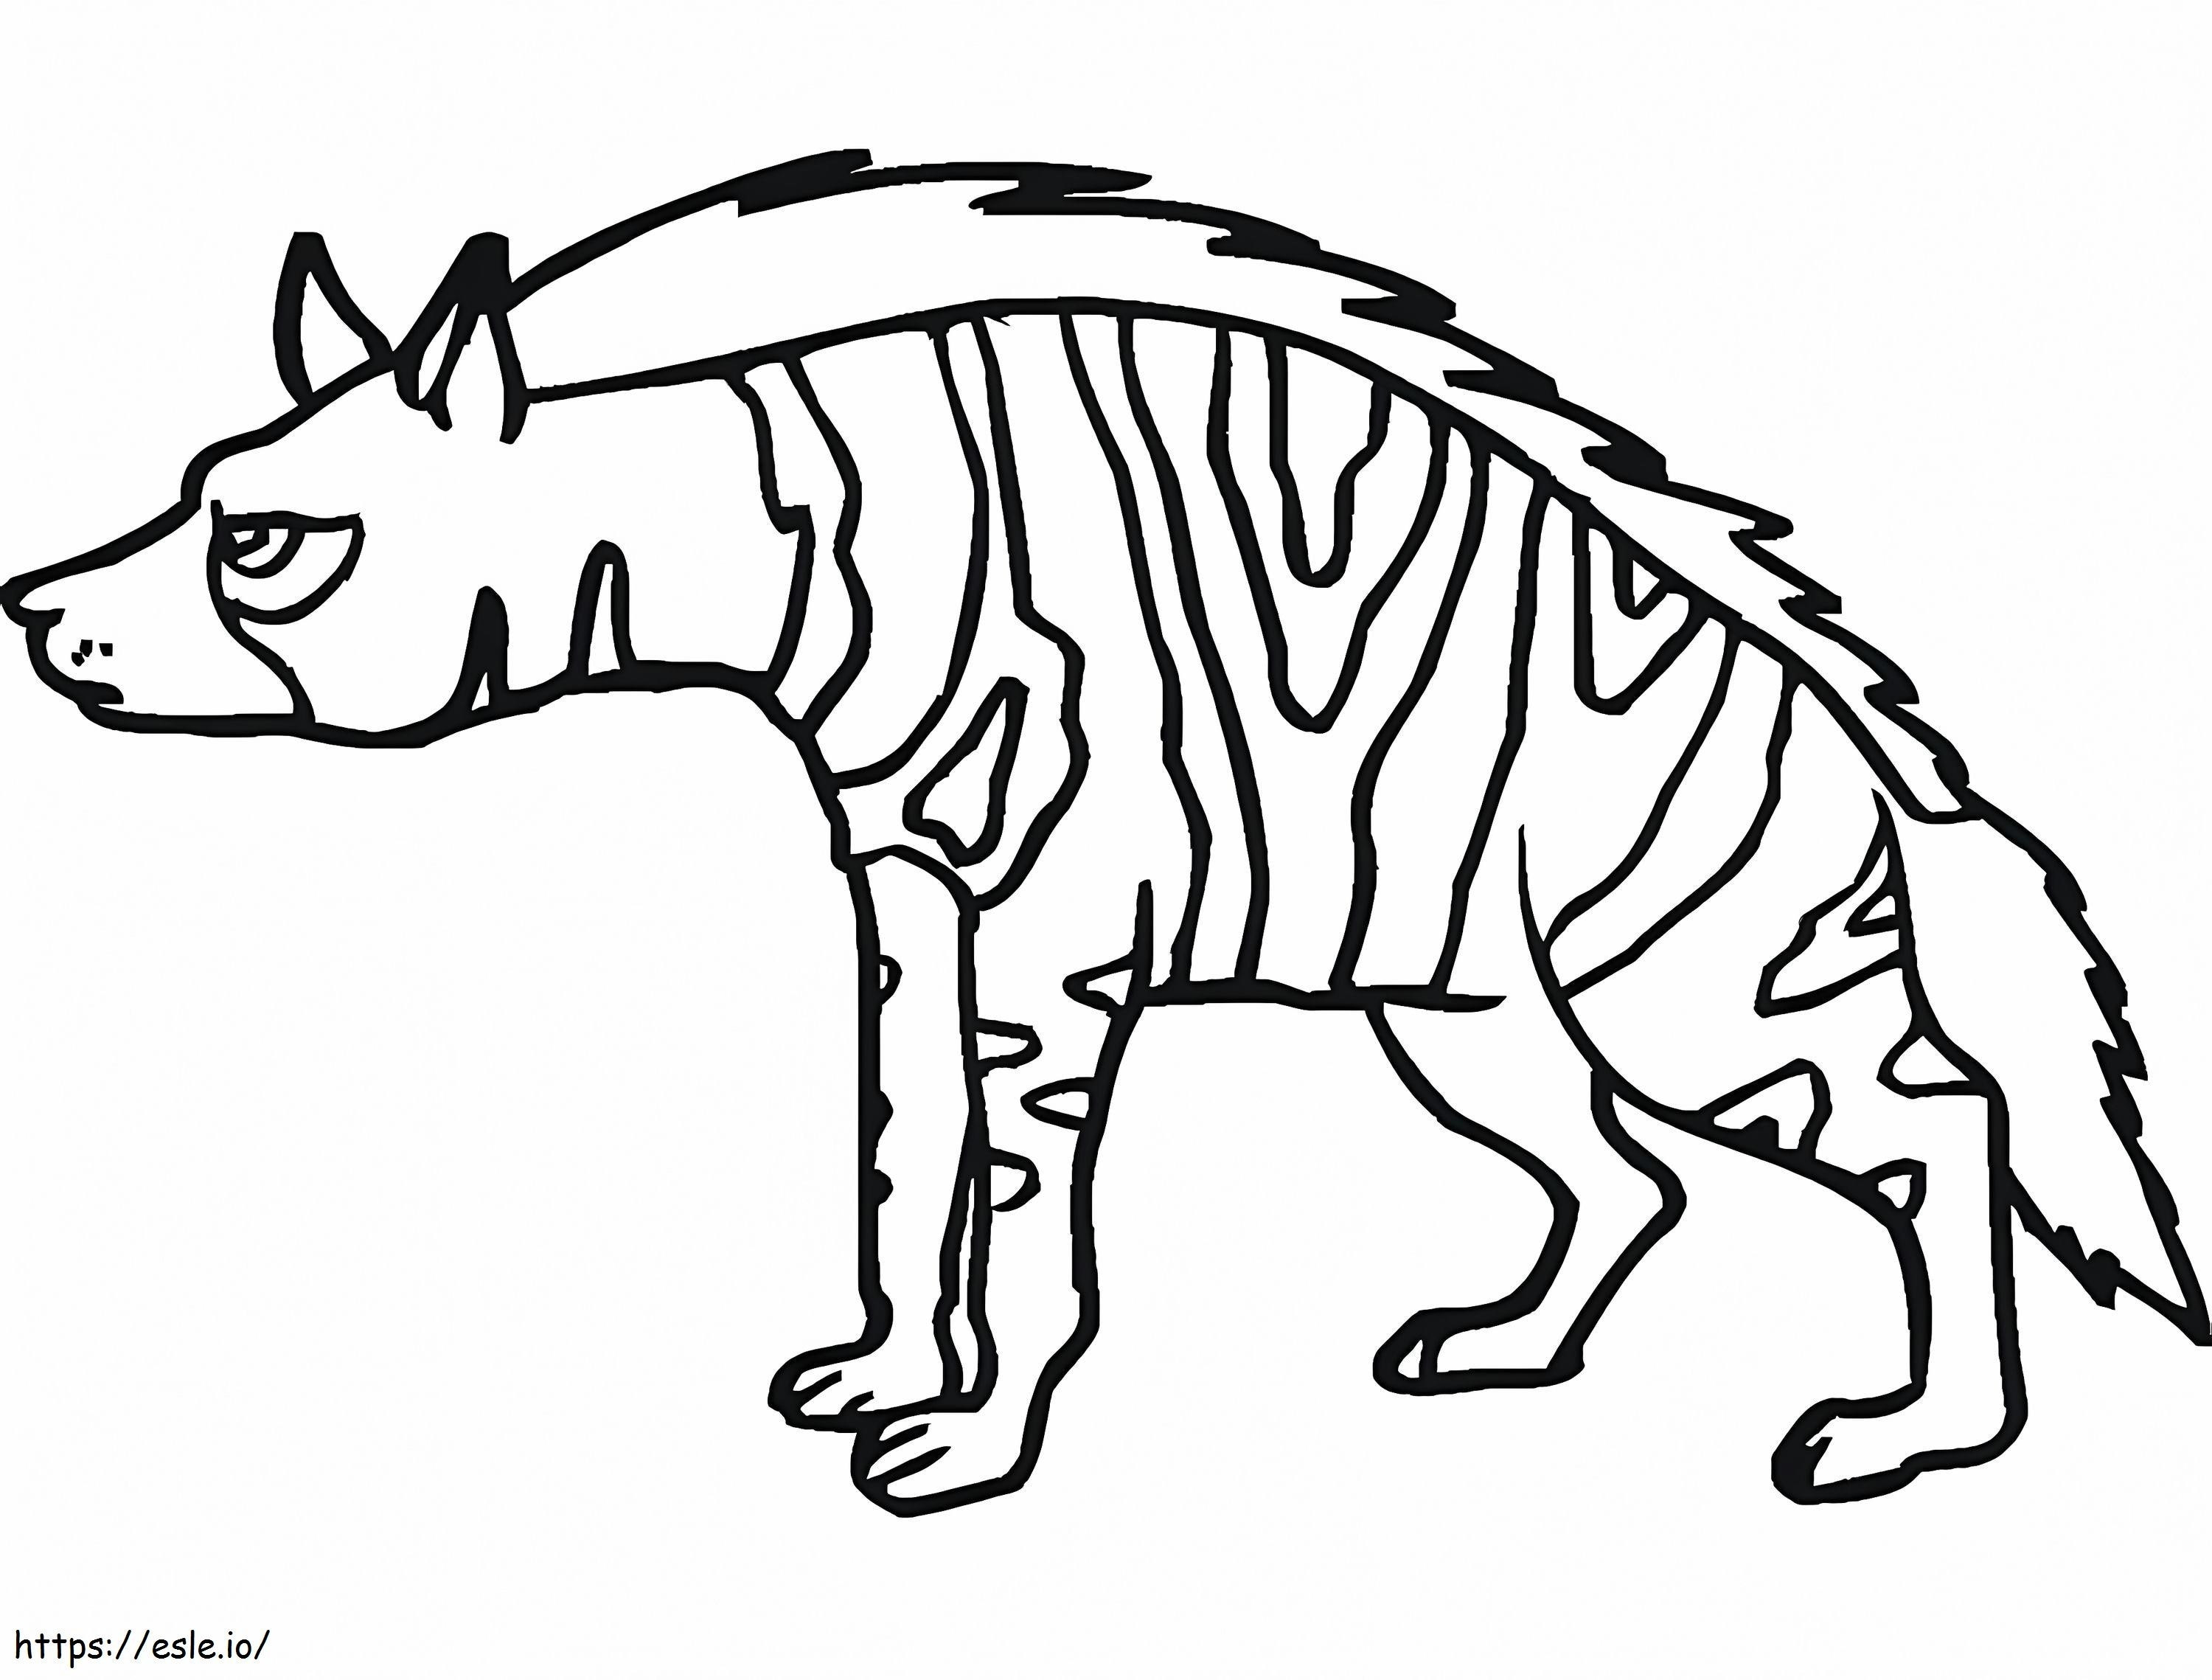 Striped Hyena 2 coloring page